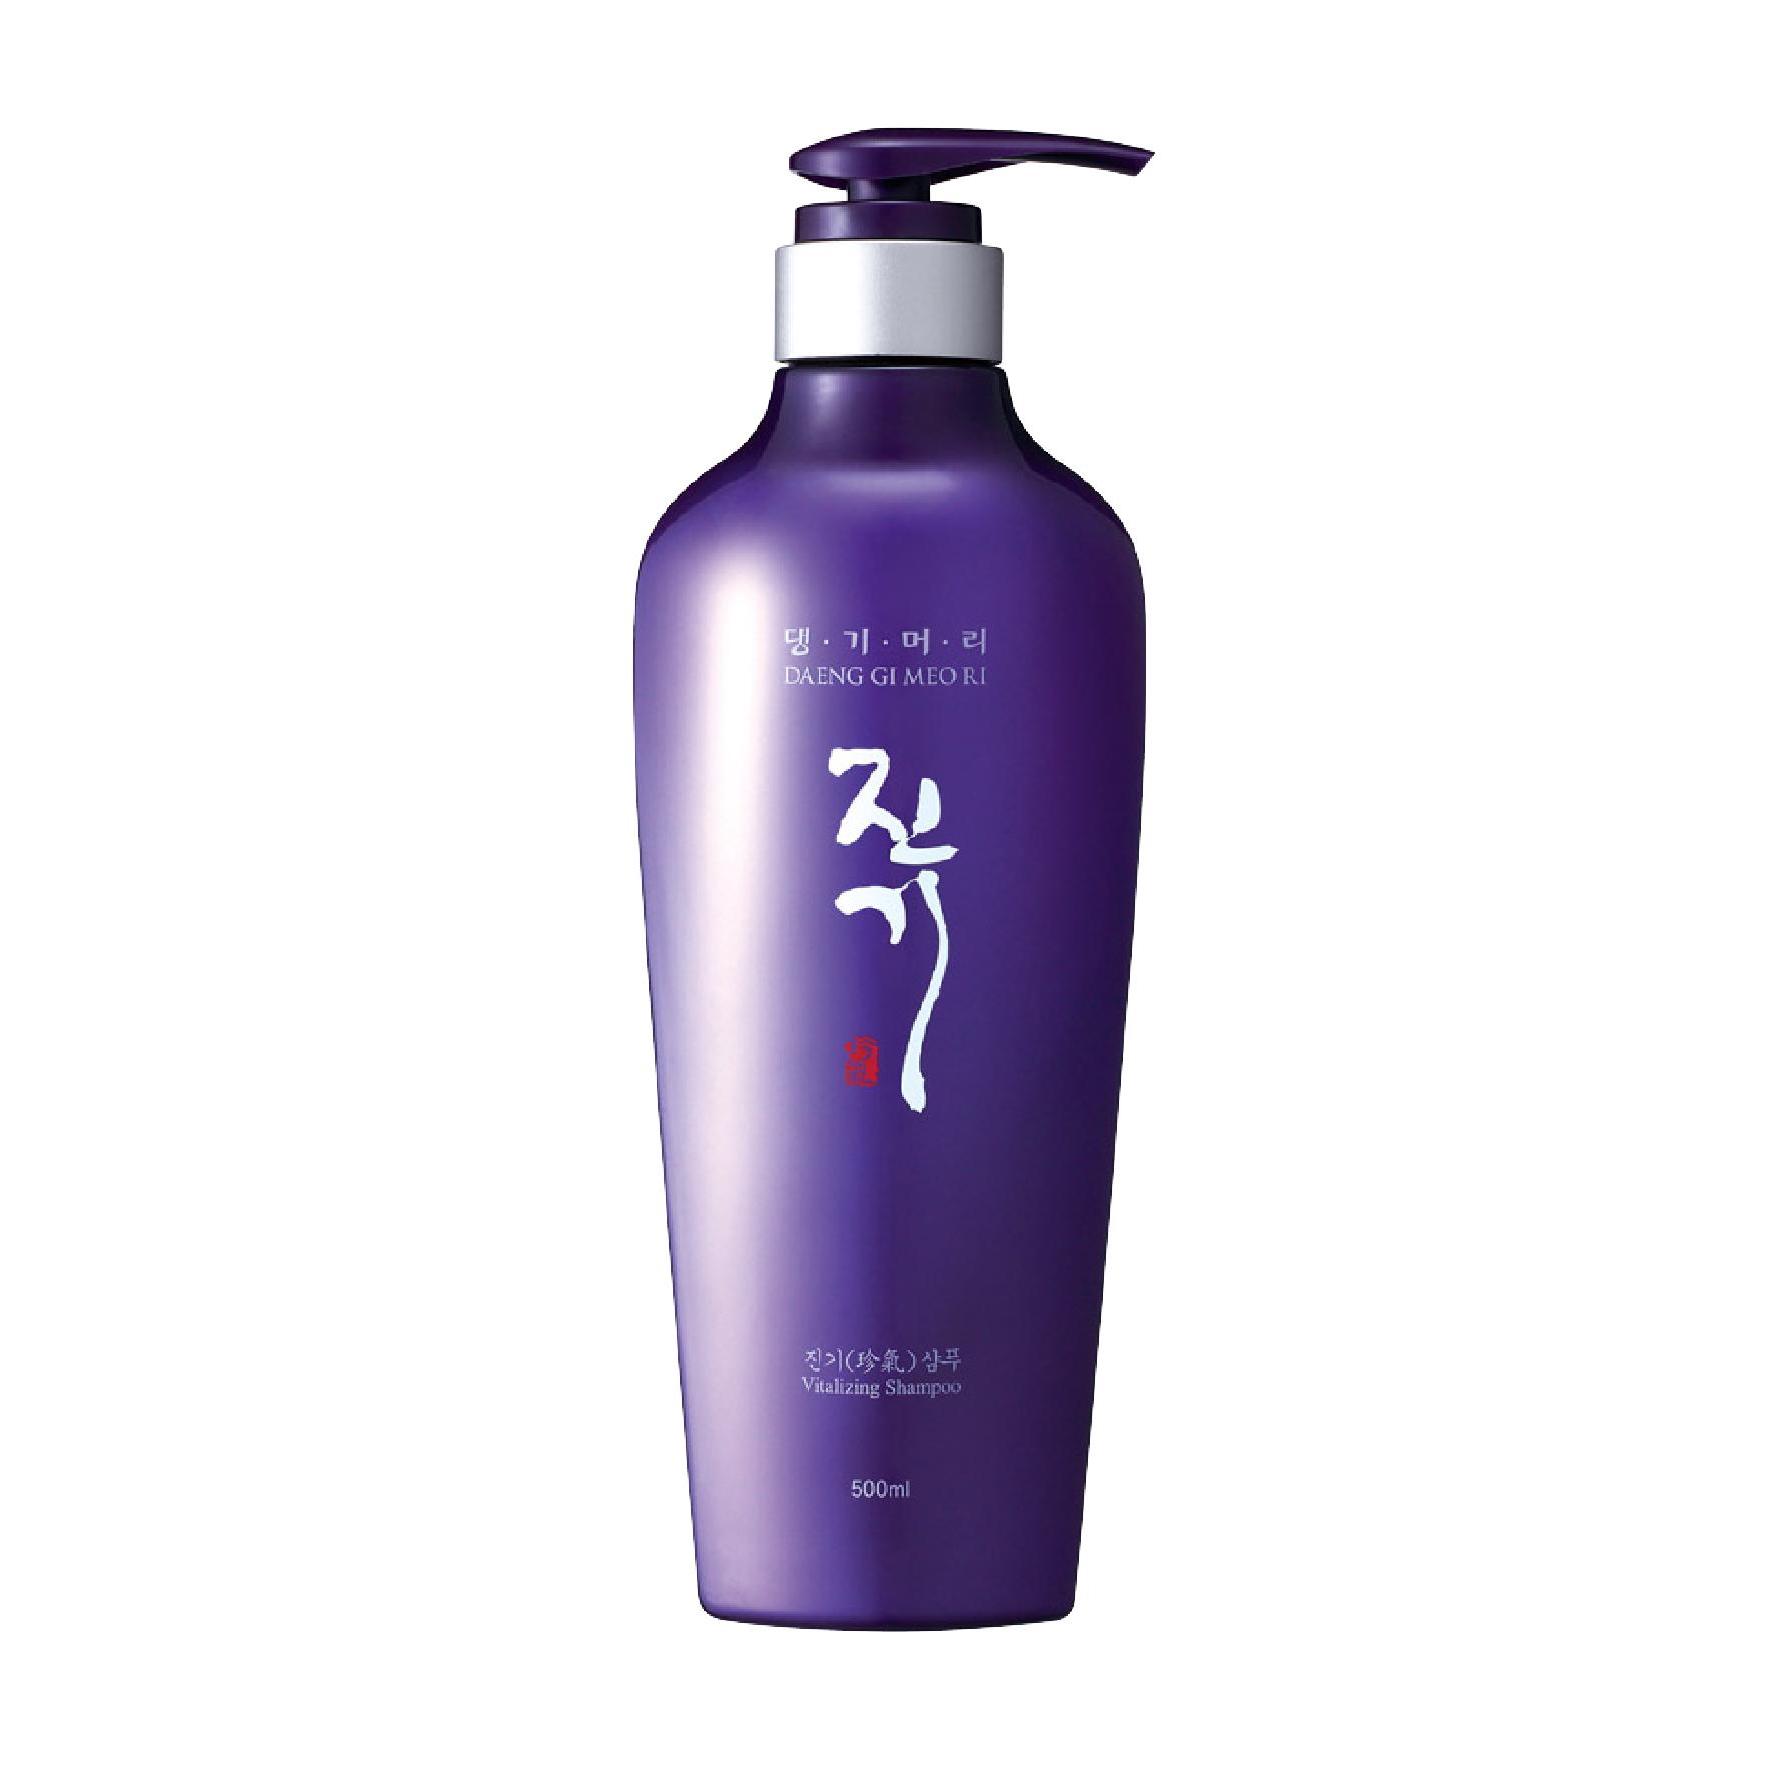 DAENG GI MEO RI Vitalizing Shampoo (300ml)